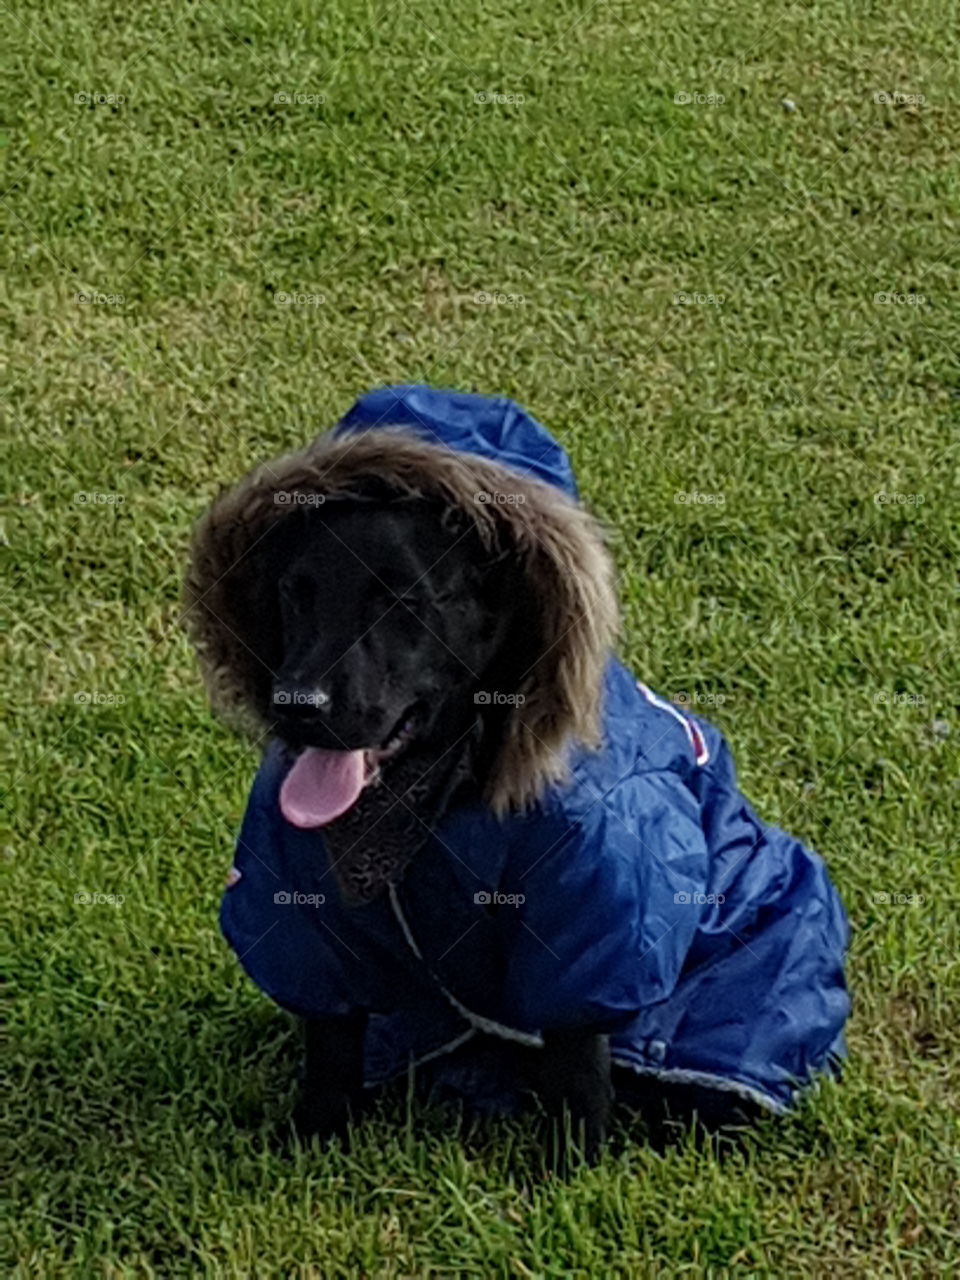 my dog wearing his coat